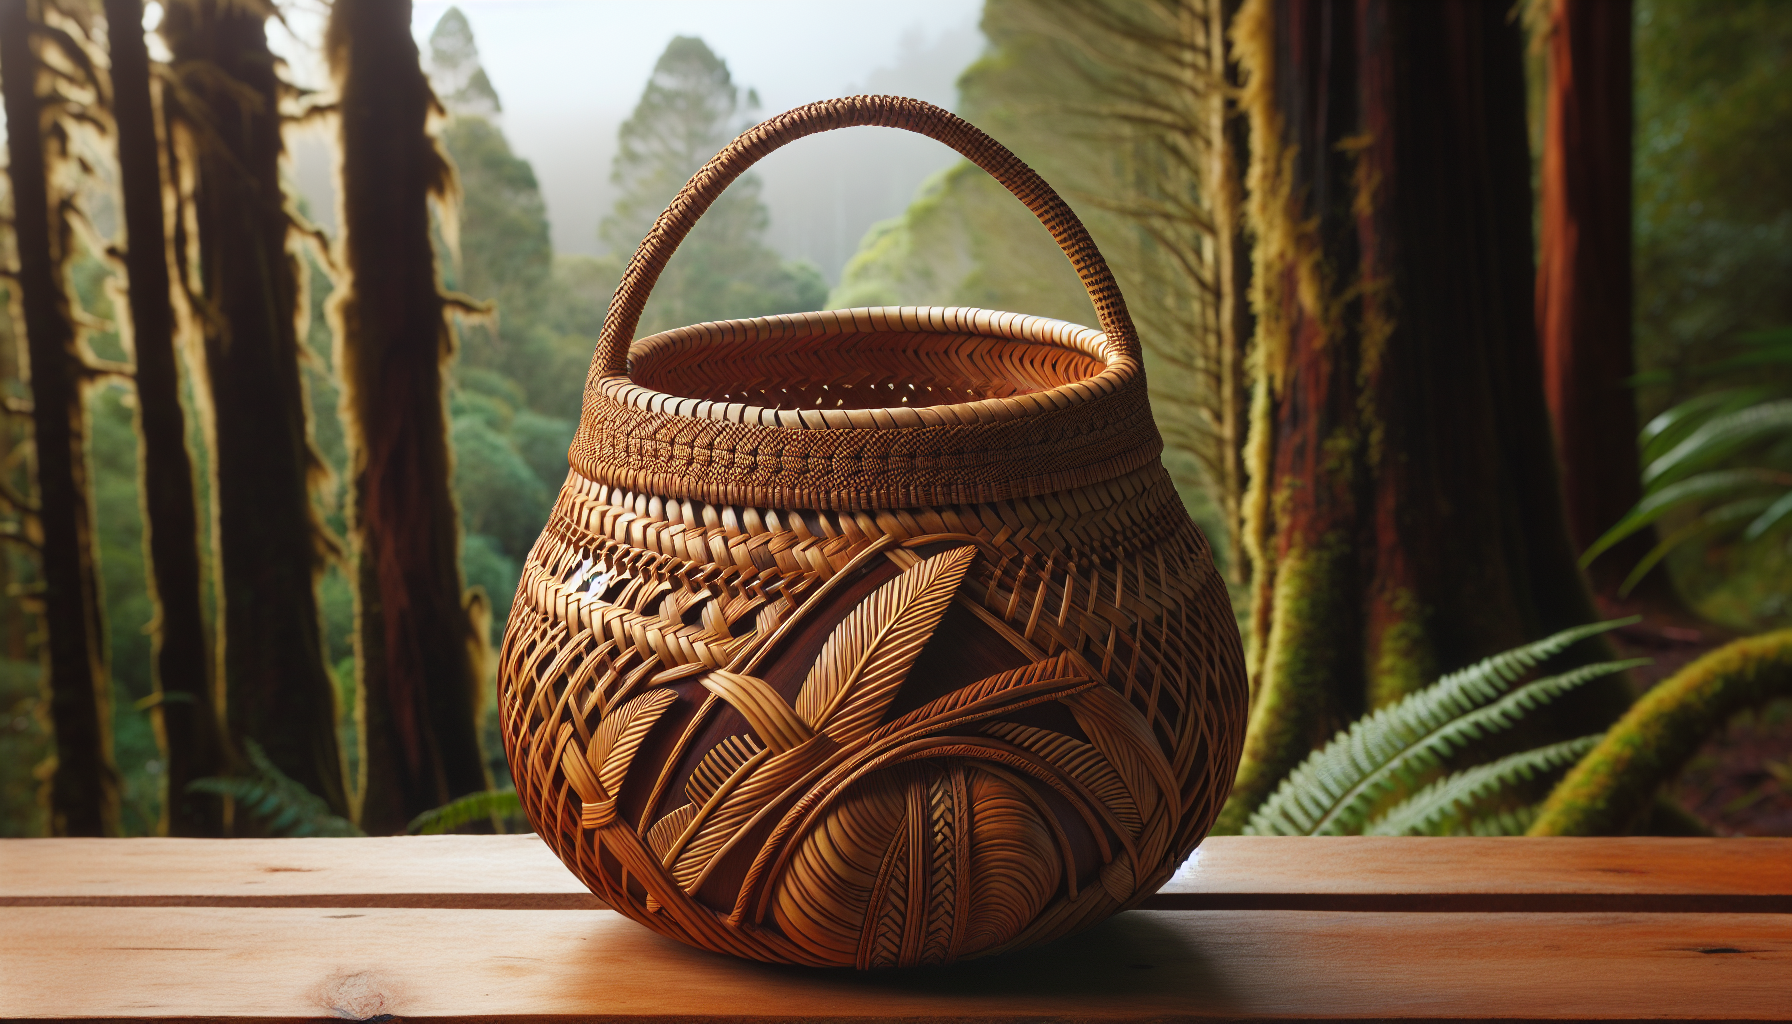 A traditional Maori basket made from manuka wood and bark